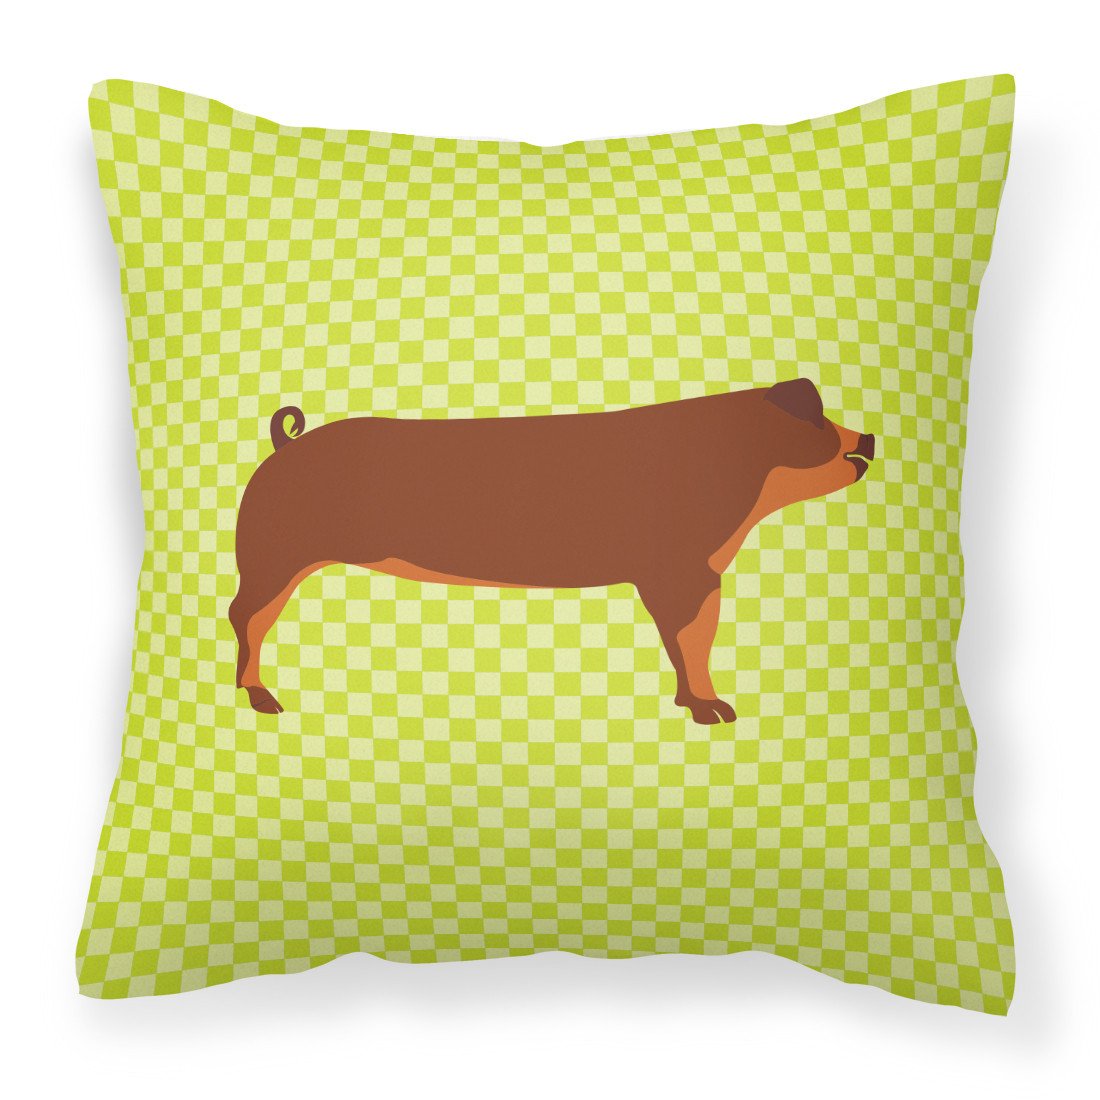 Duroc Pig Green Fabric Decorative Pillow BB7768PW1818 by Caroline's Treasures